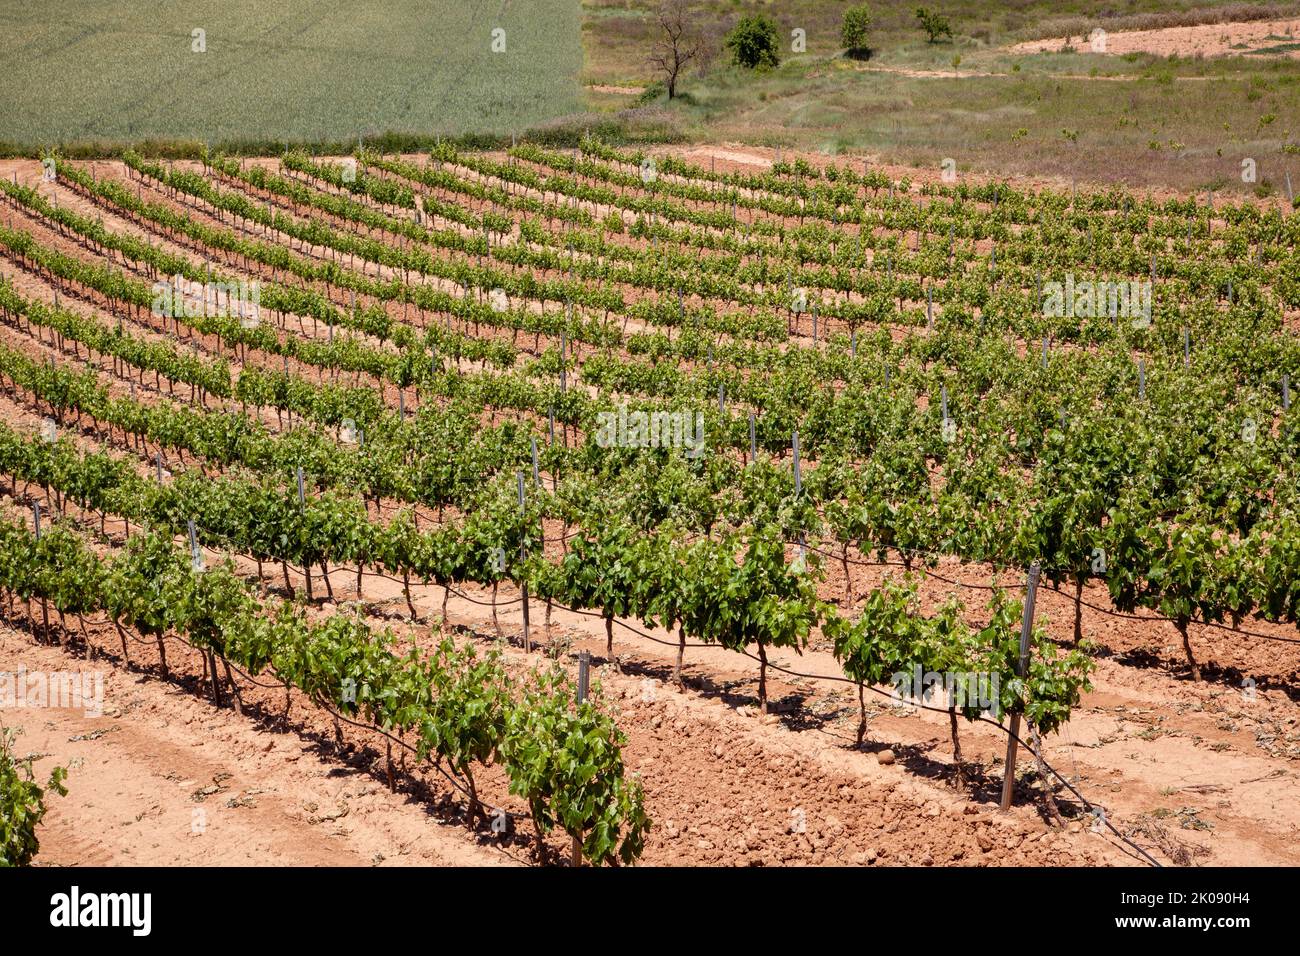 Spanish vineyards in the Rioja region of Spain near Navarrete Stock Photo